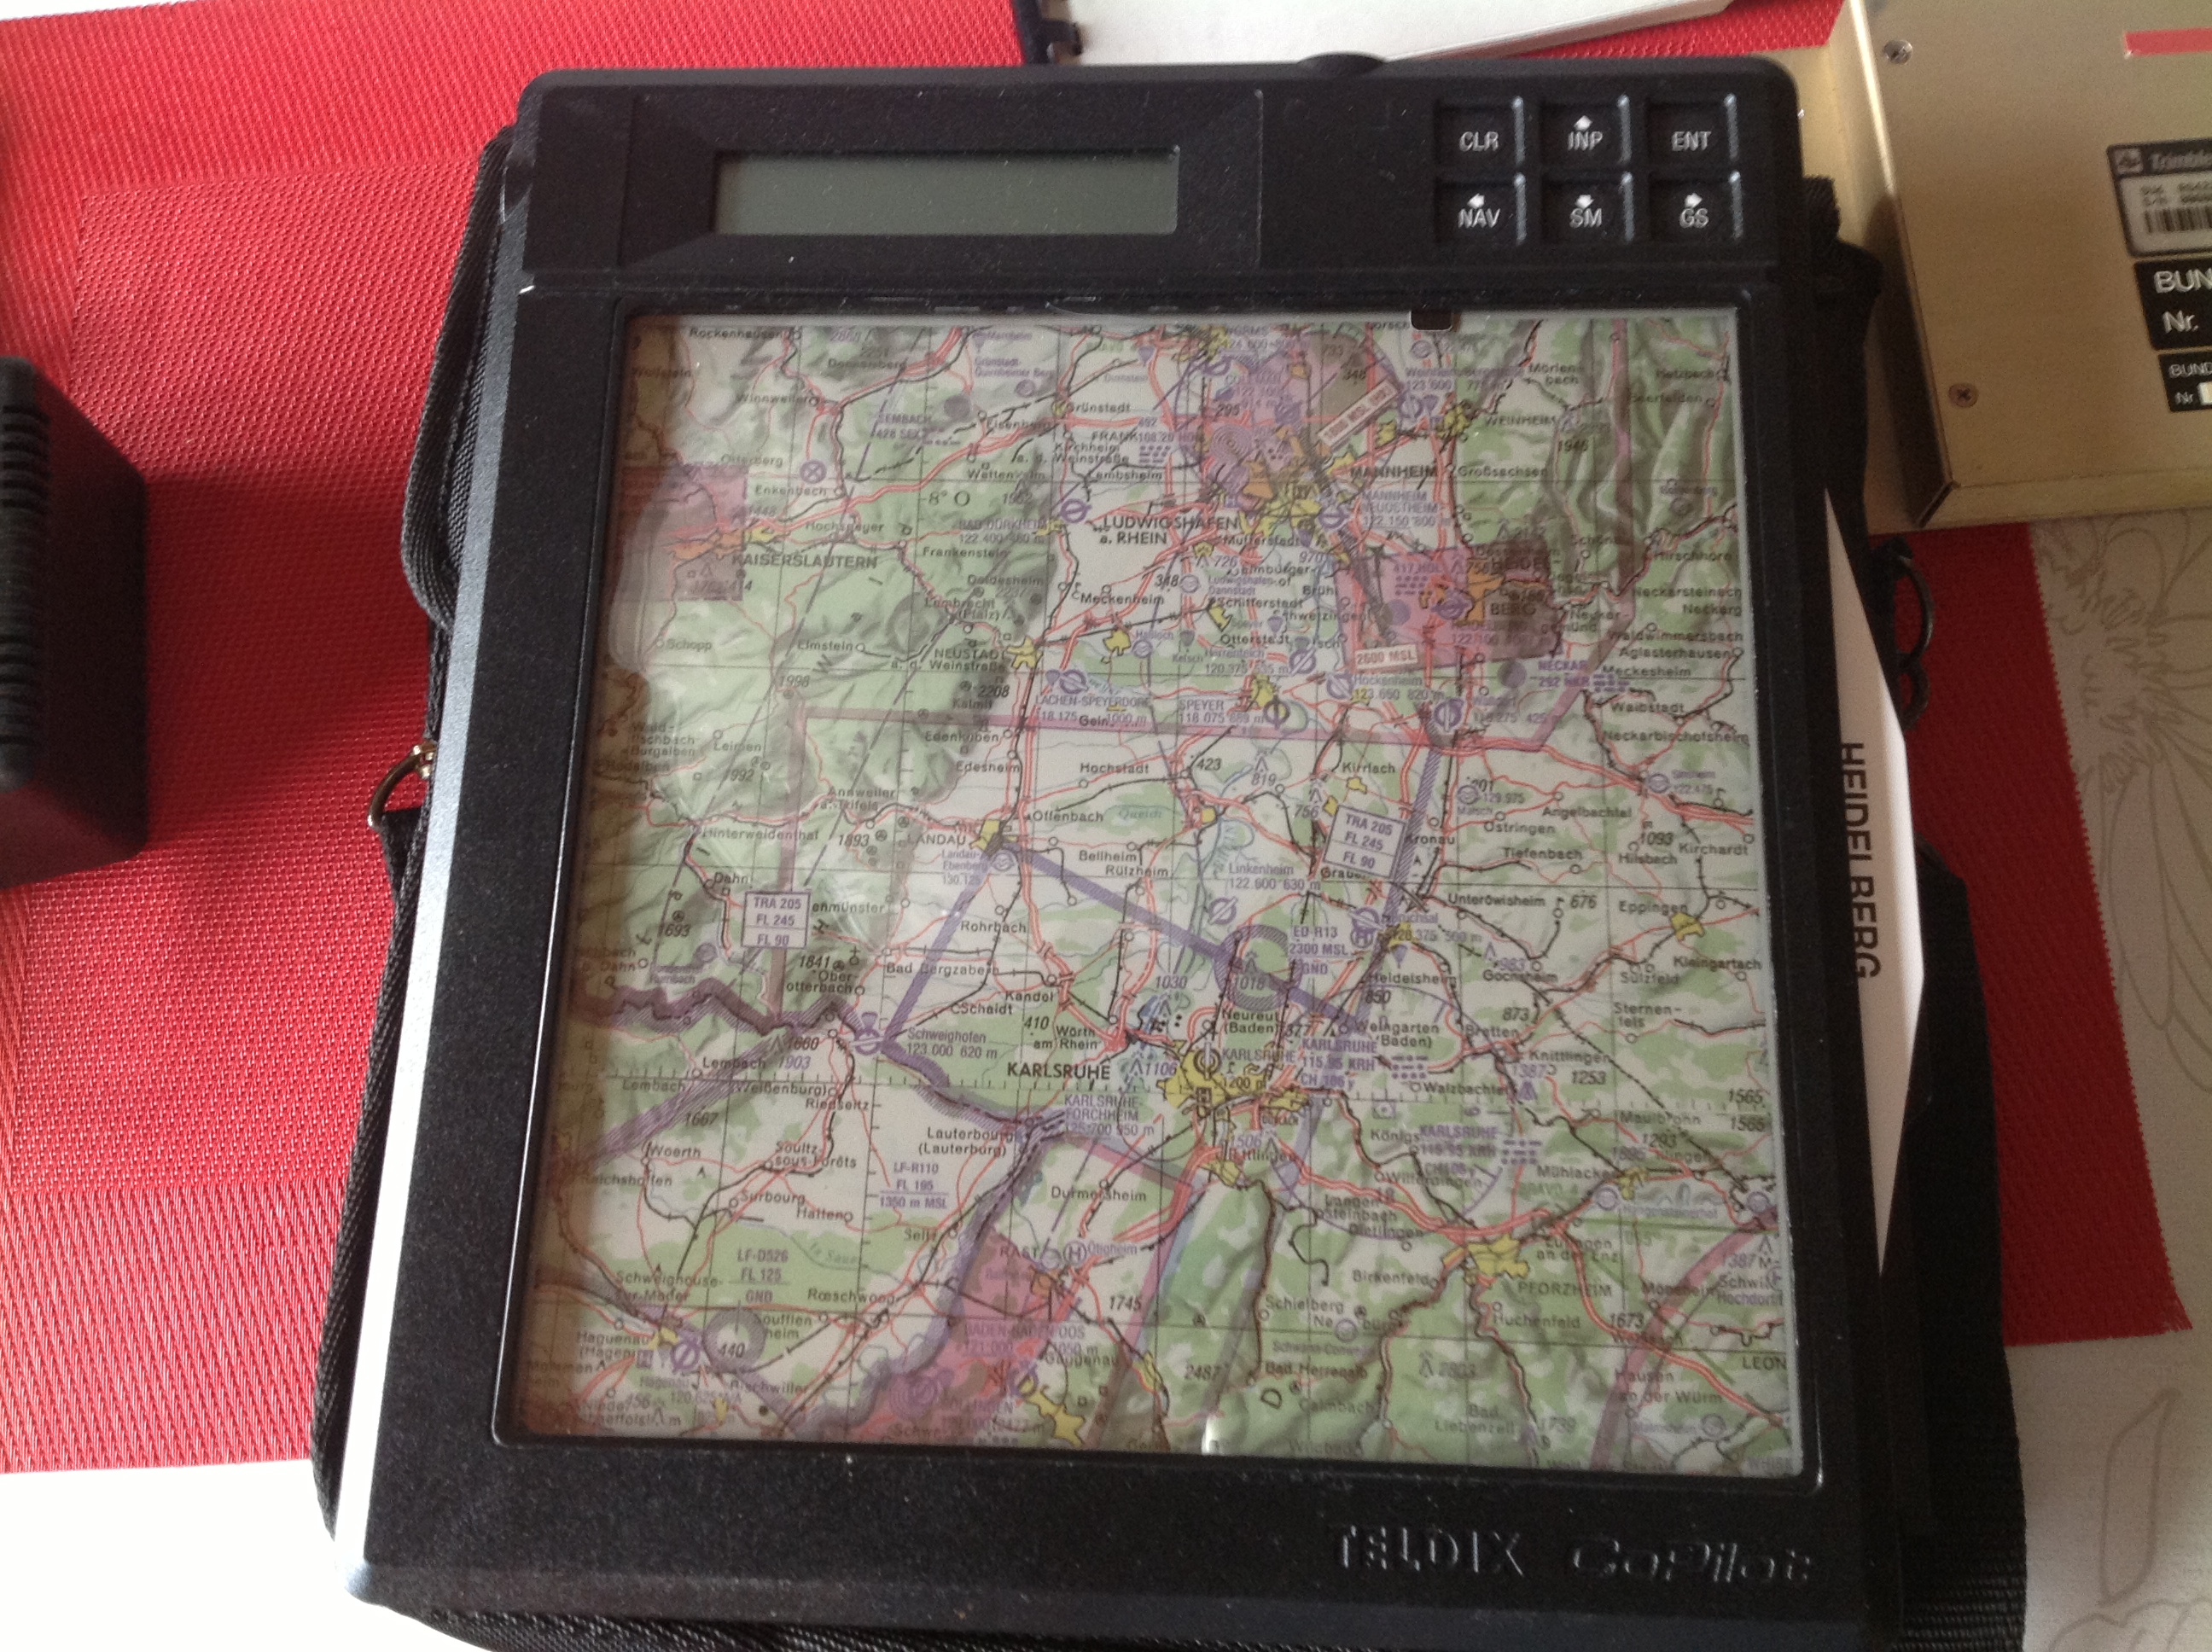 Teldix CoPilot GPS-Empfänger und Kartengerät